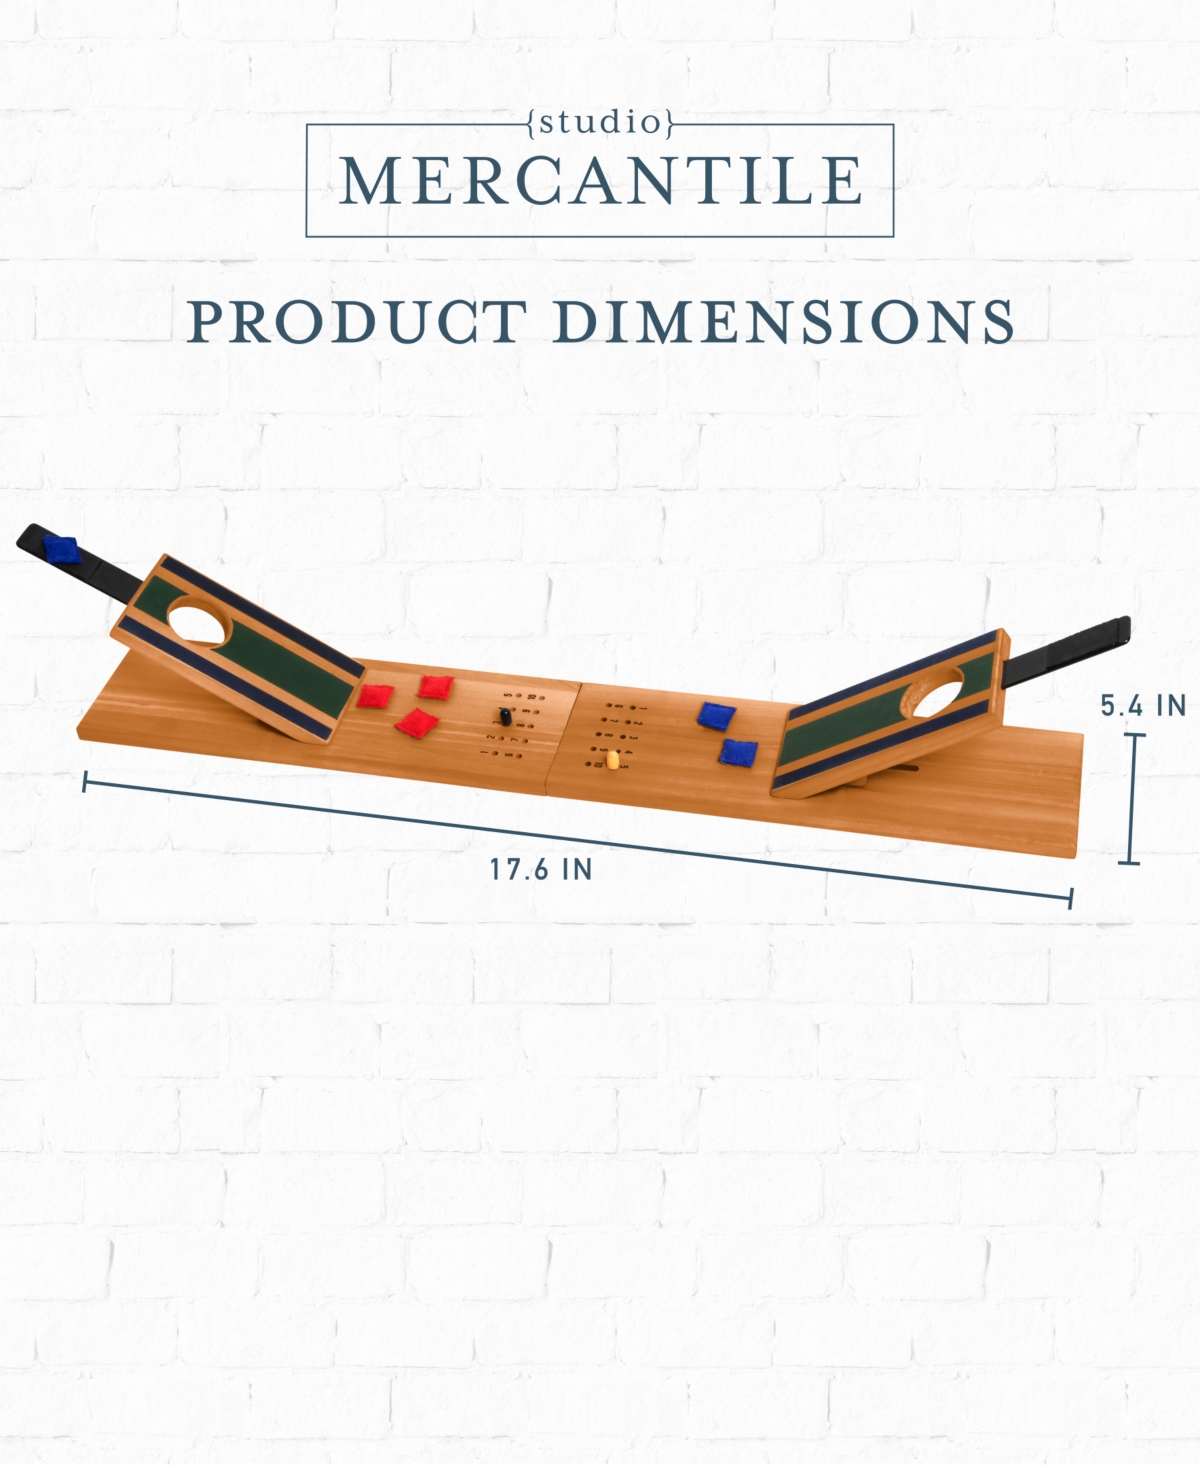 Shop Studio Mercantile Wooden Tabletop Cornhole Game In Light,pastel Brown